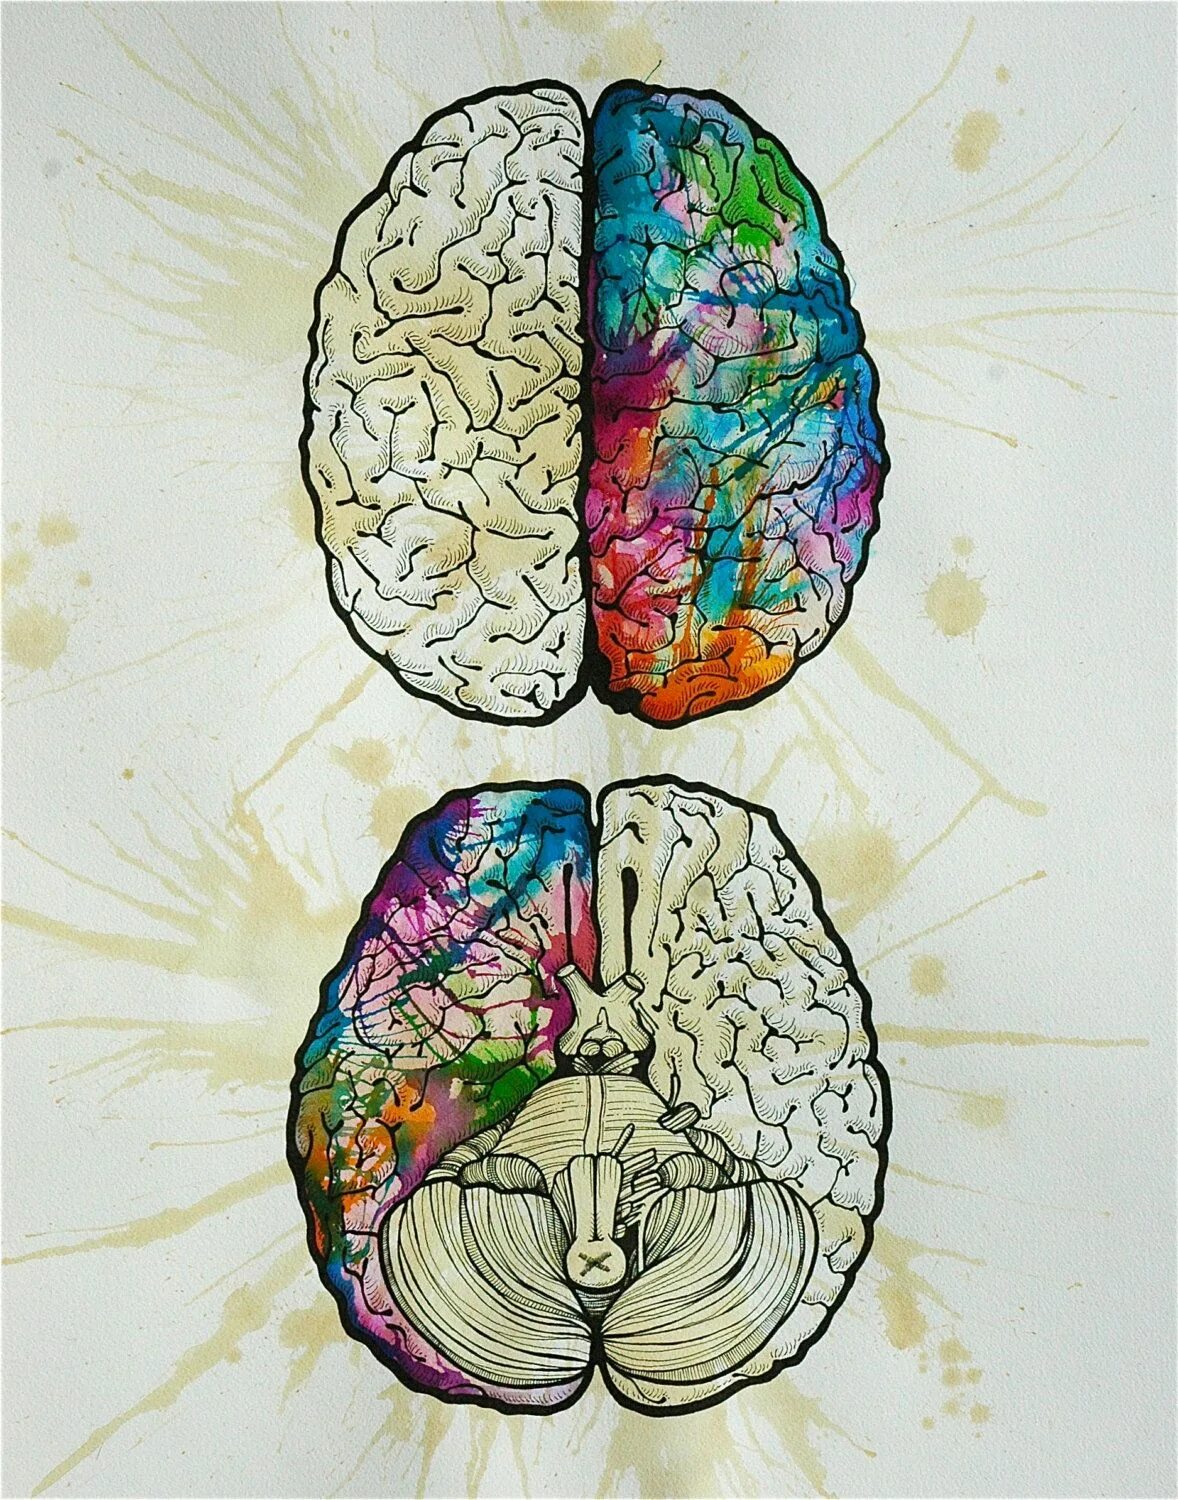 Полушария мозга. Мозг рисунок. Асимметрия полушарий головного мозга. Функциональная асимметрия полушарий мозга. Картинка полушарие мозга